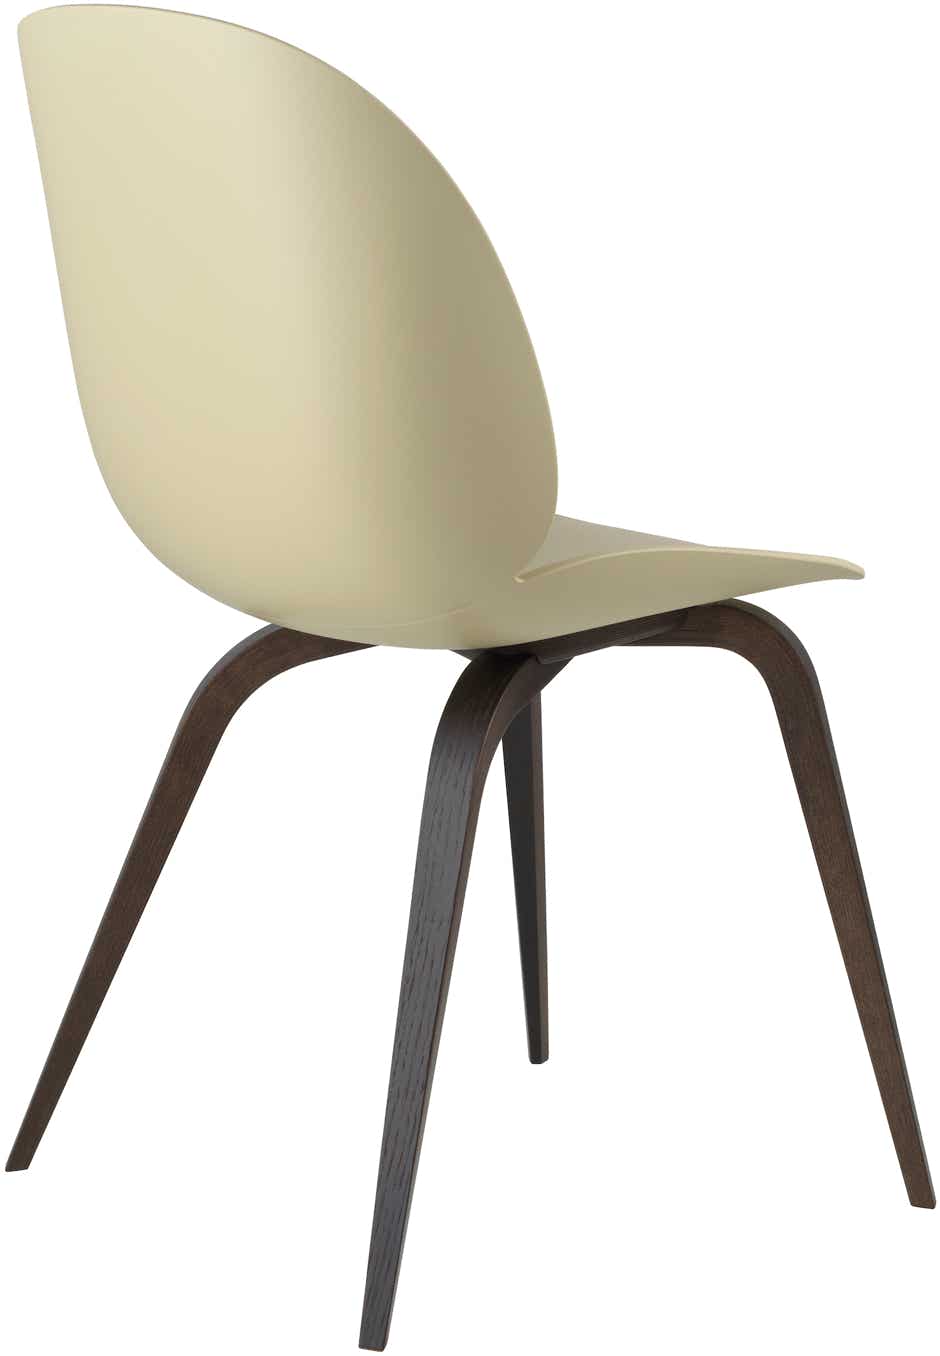 Beetle chair wooden legs GamFratesi, 2017